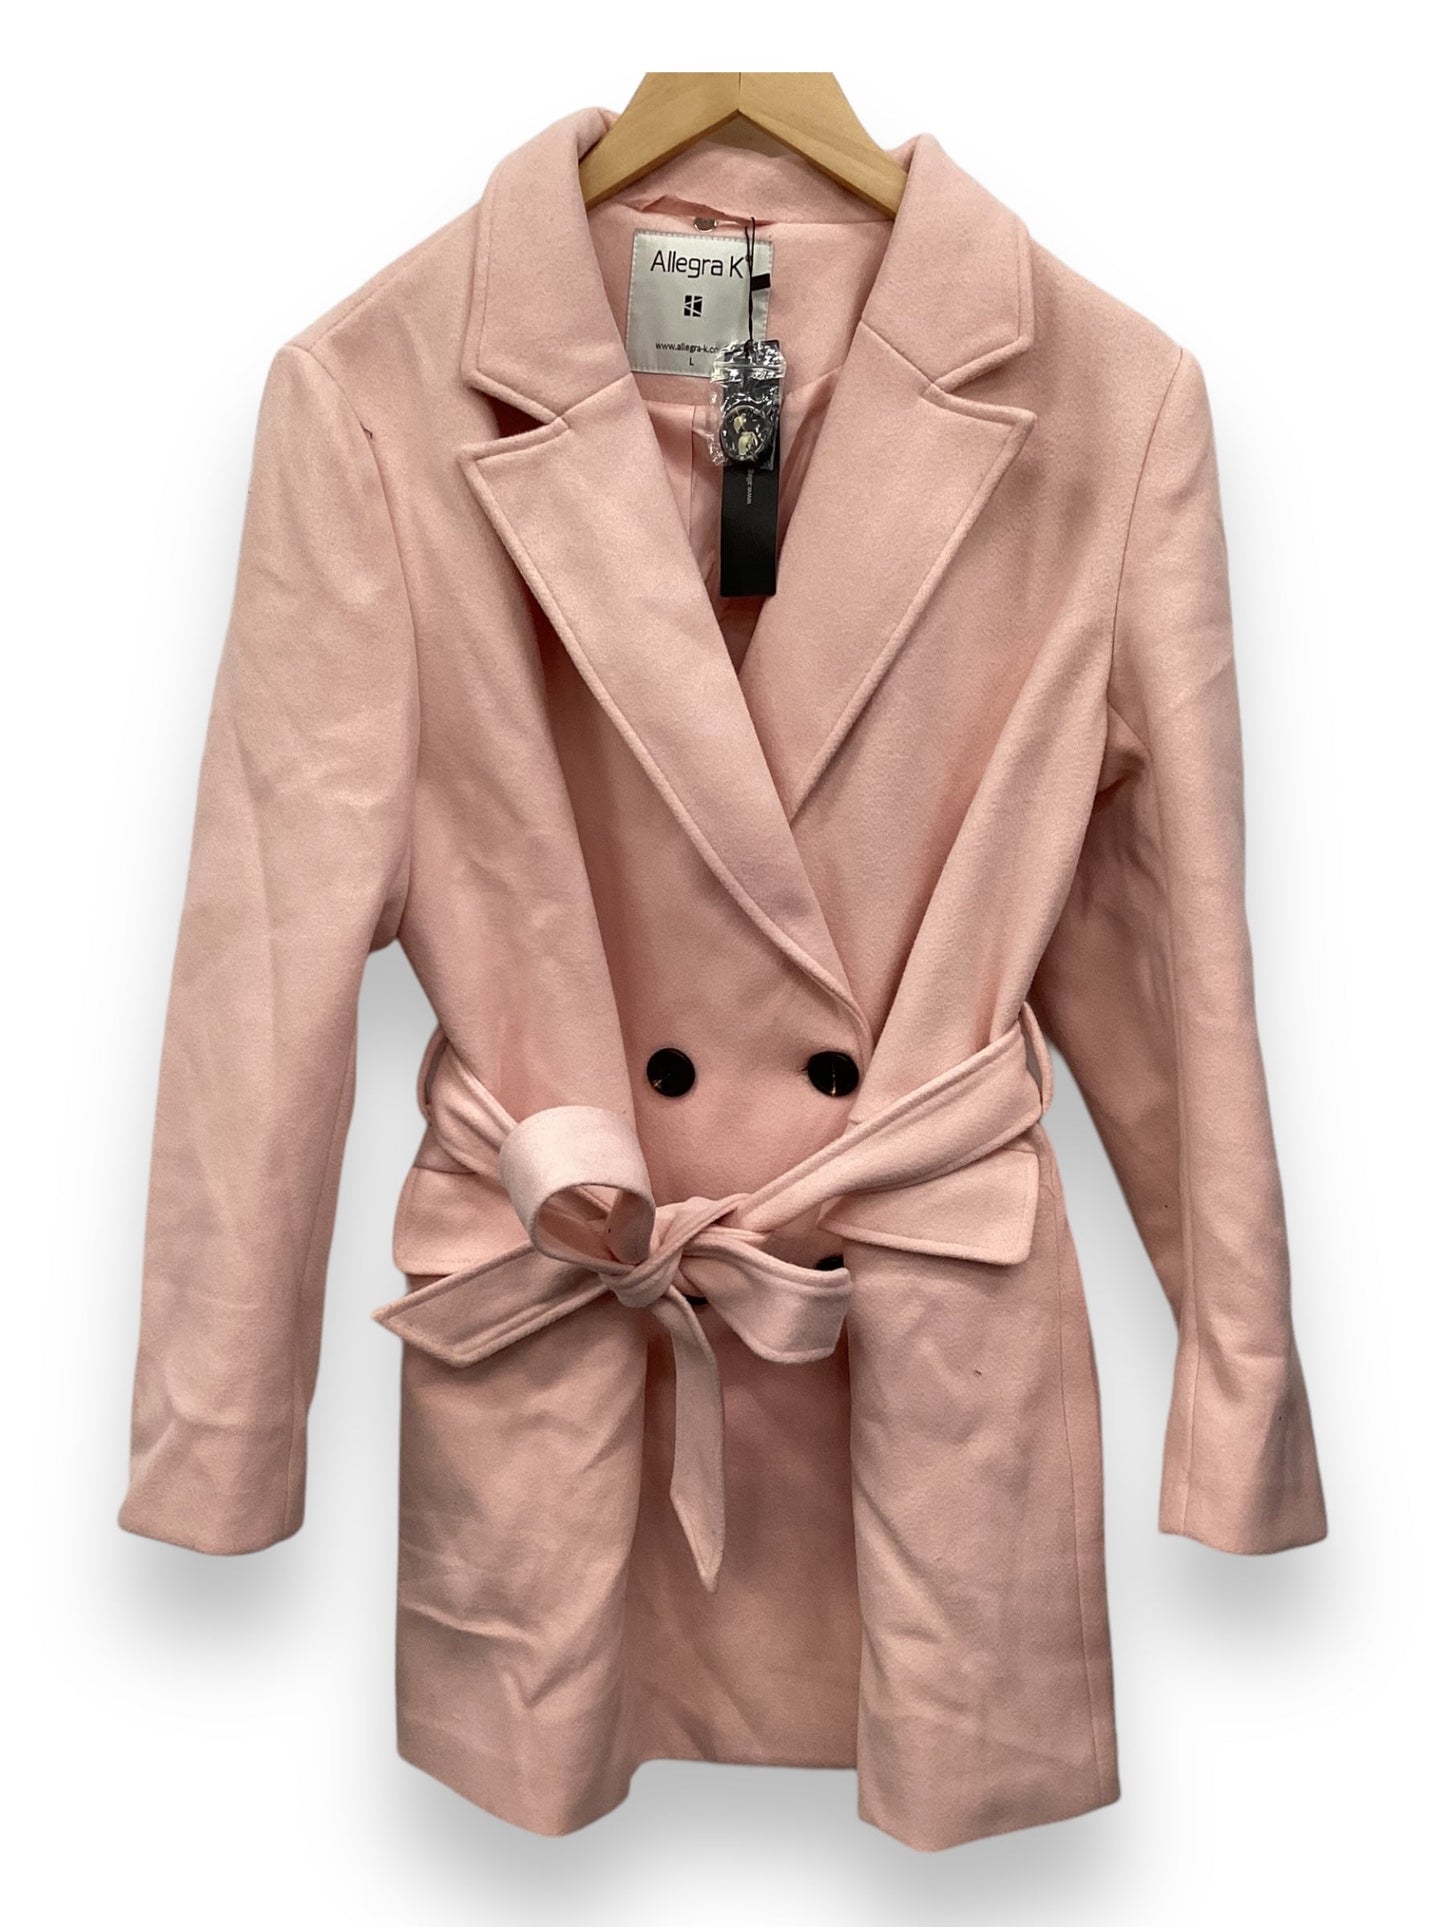 Pink Coat Peacoat Allegra K, Size L